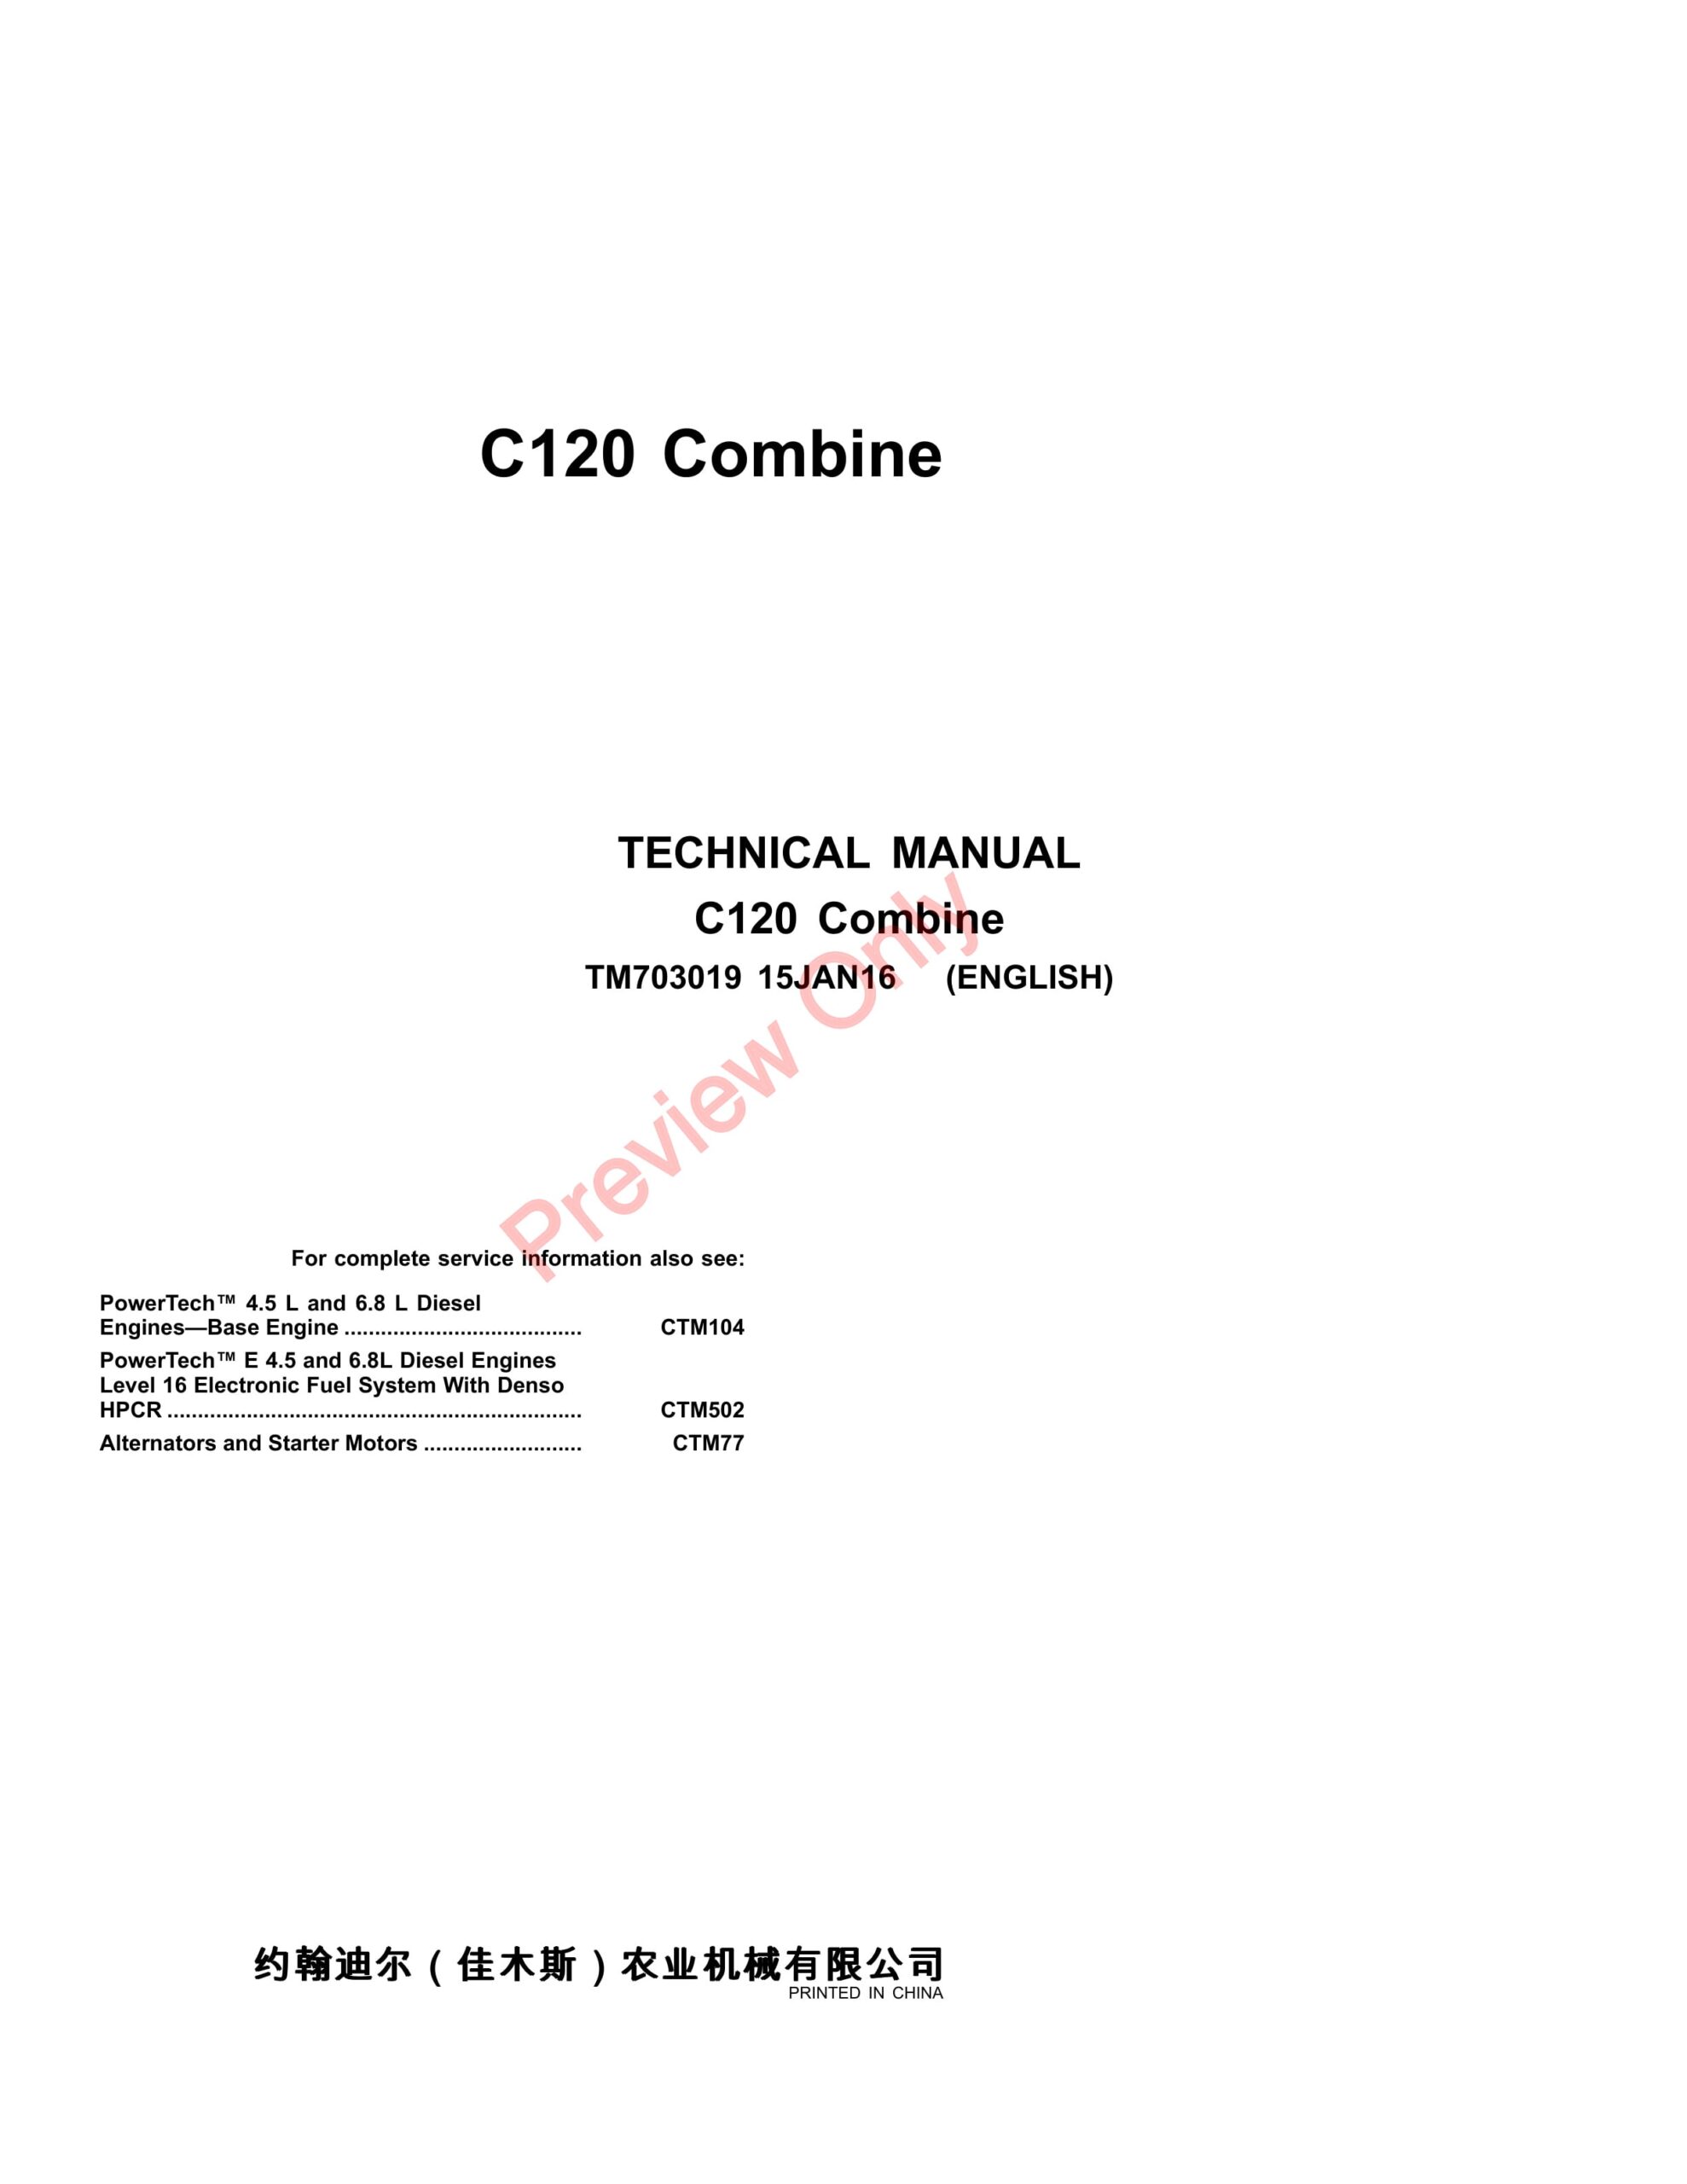 John Deere C120 Combines Technical Manual TM703019 15JAN16-1